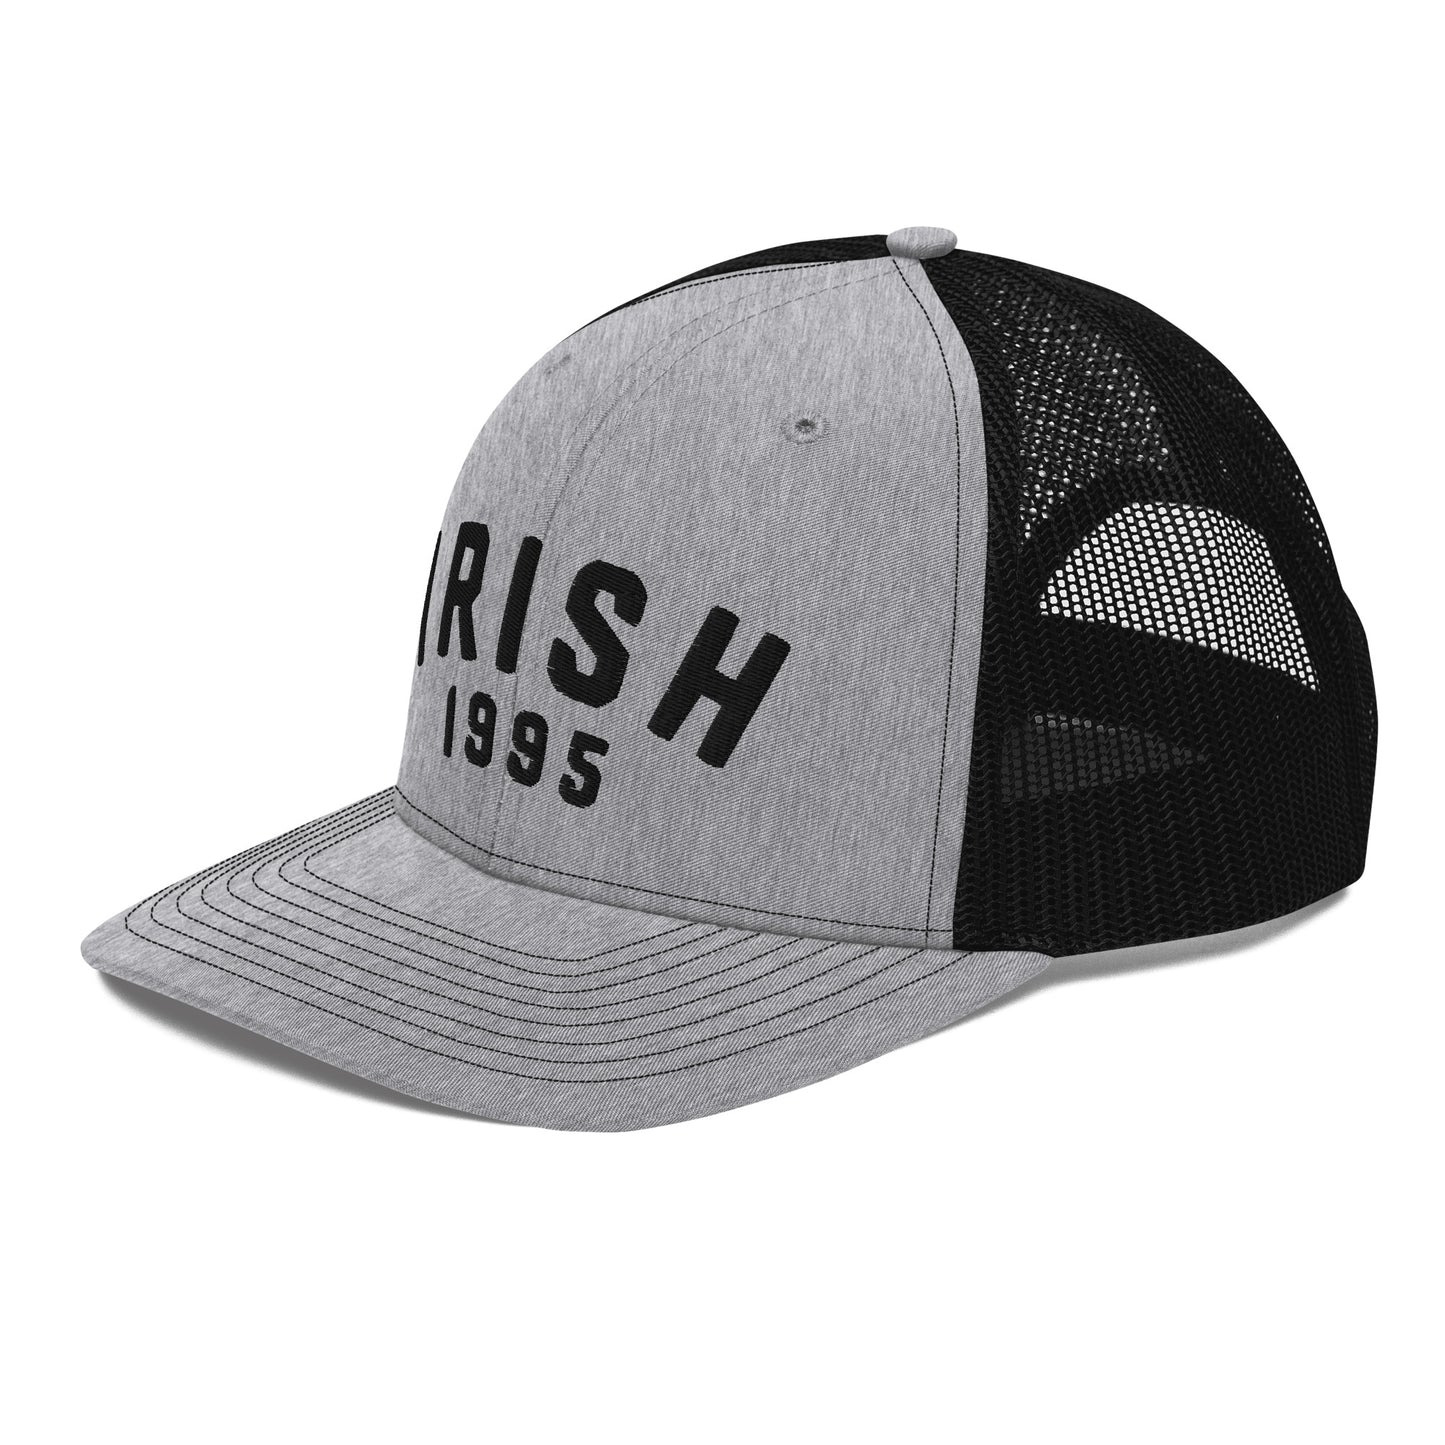 IRISH 1995 (arched)-Trucker Cap